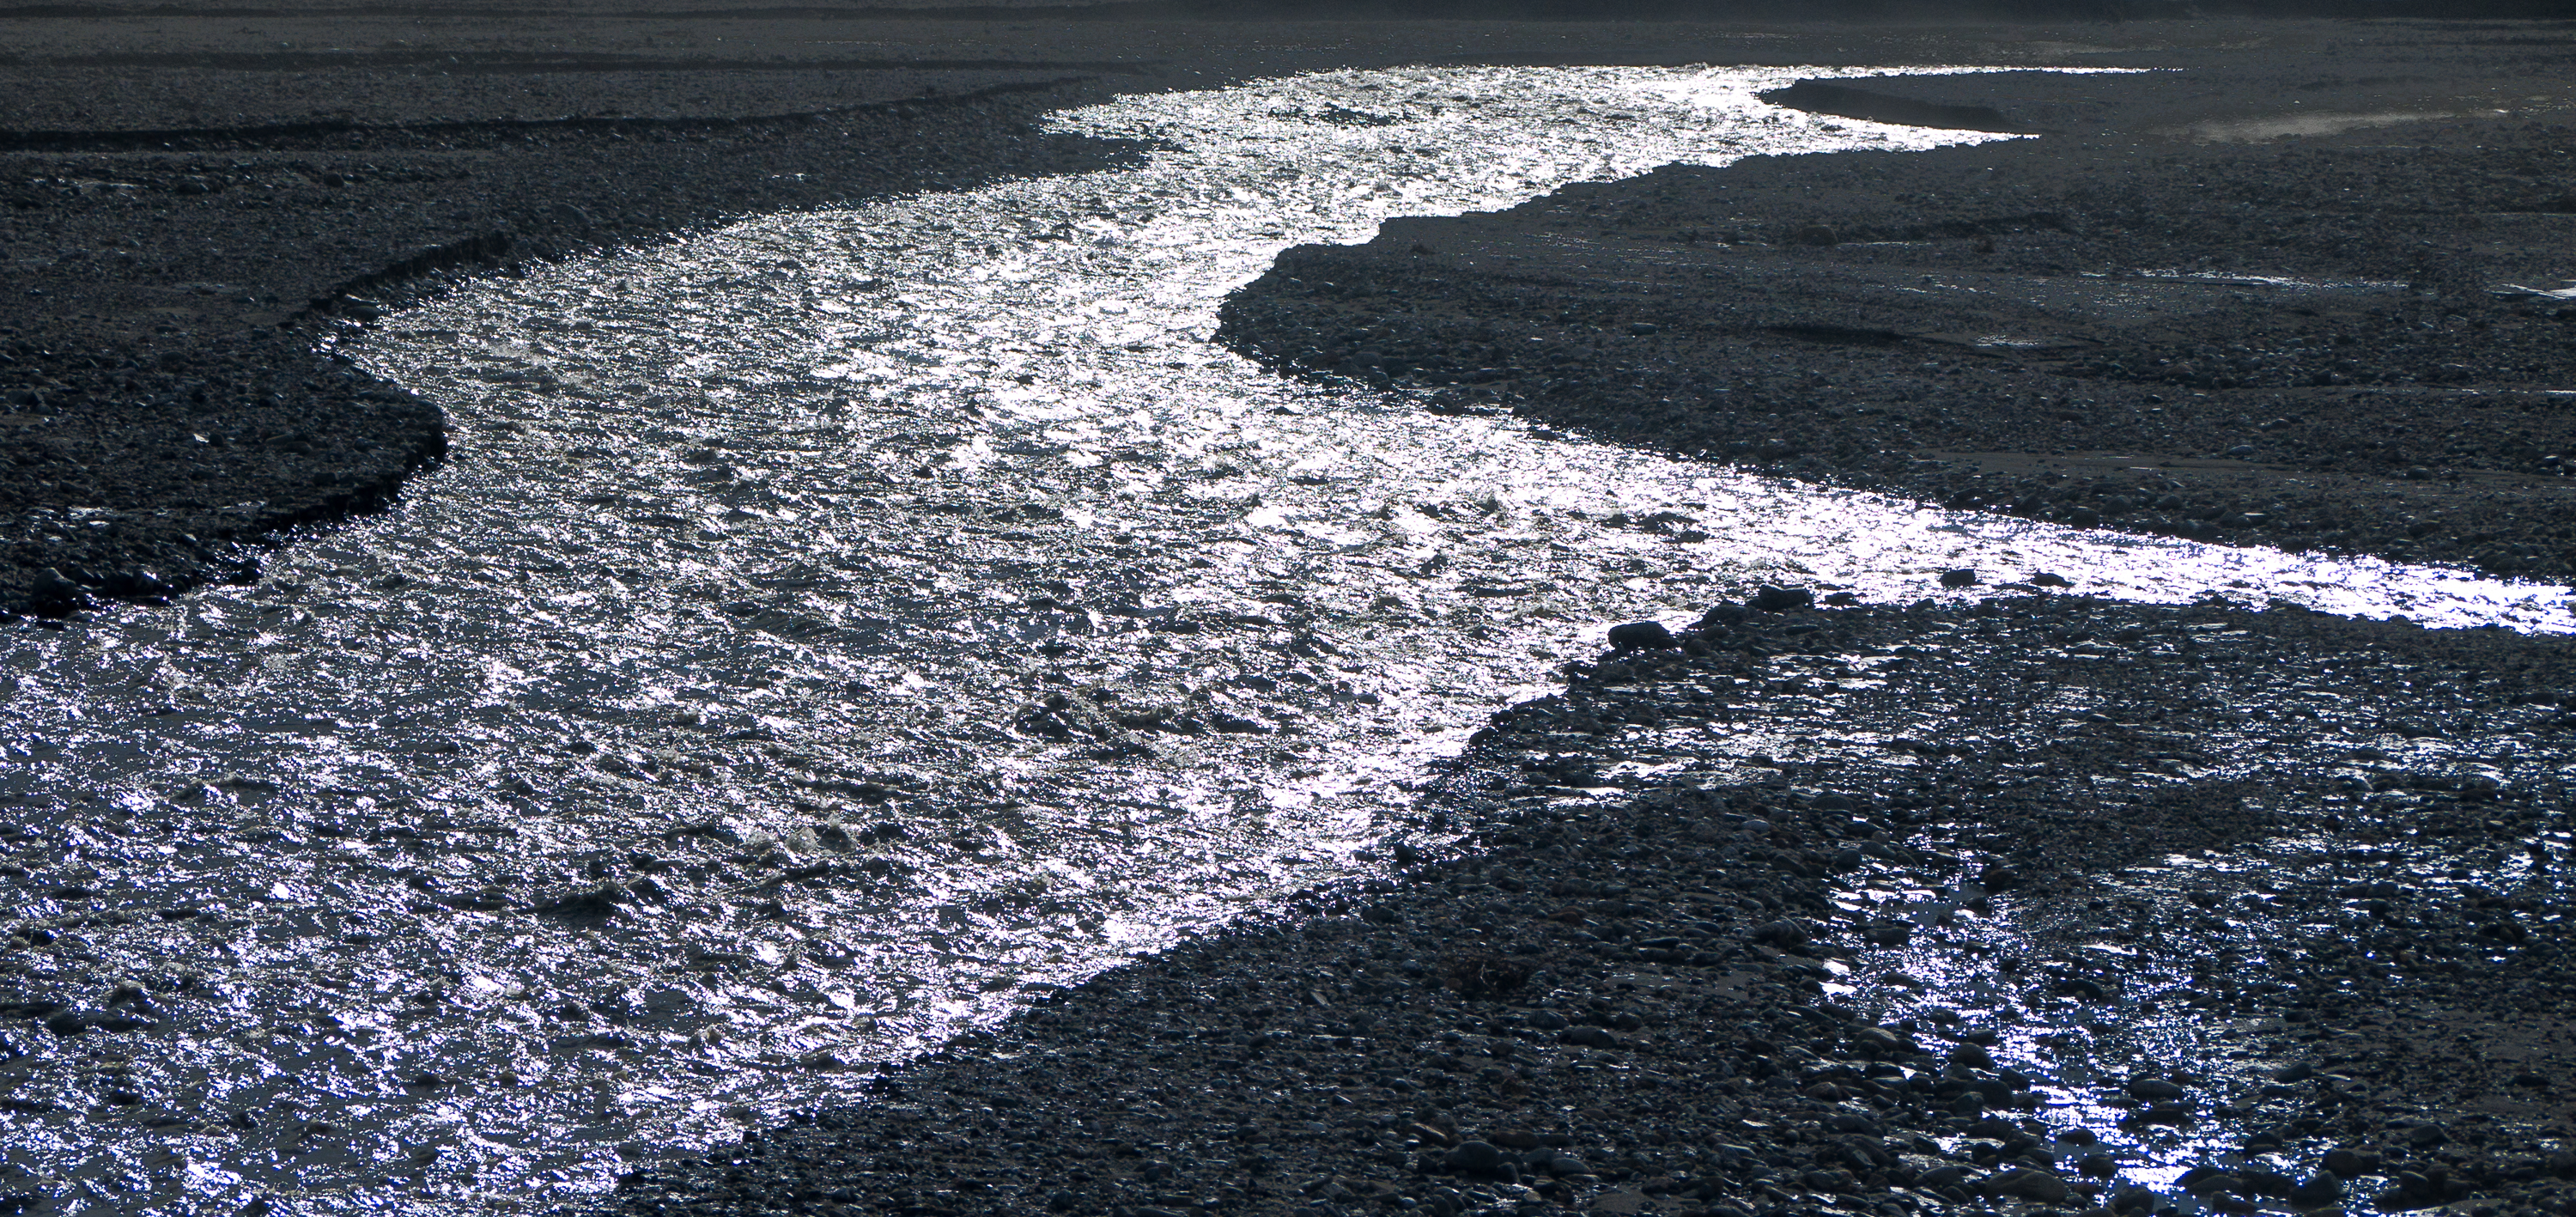 Braided river, near Denali, Alaska (2010)